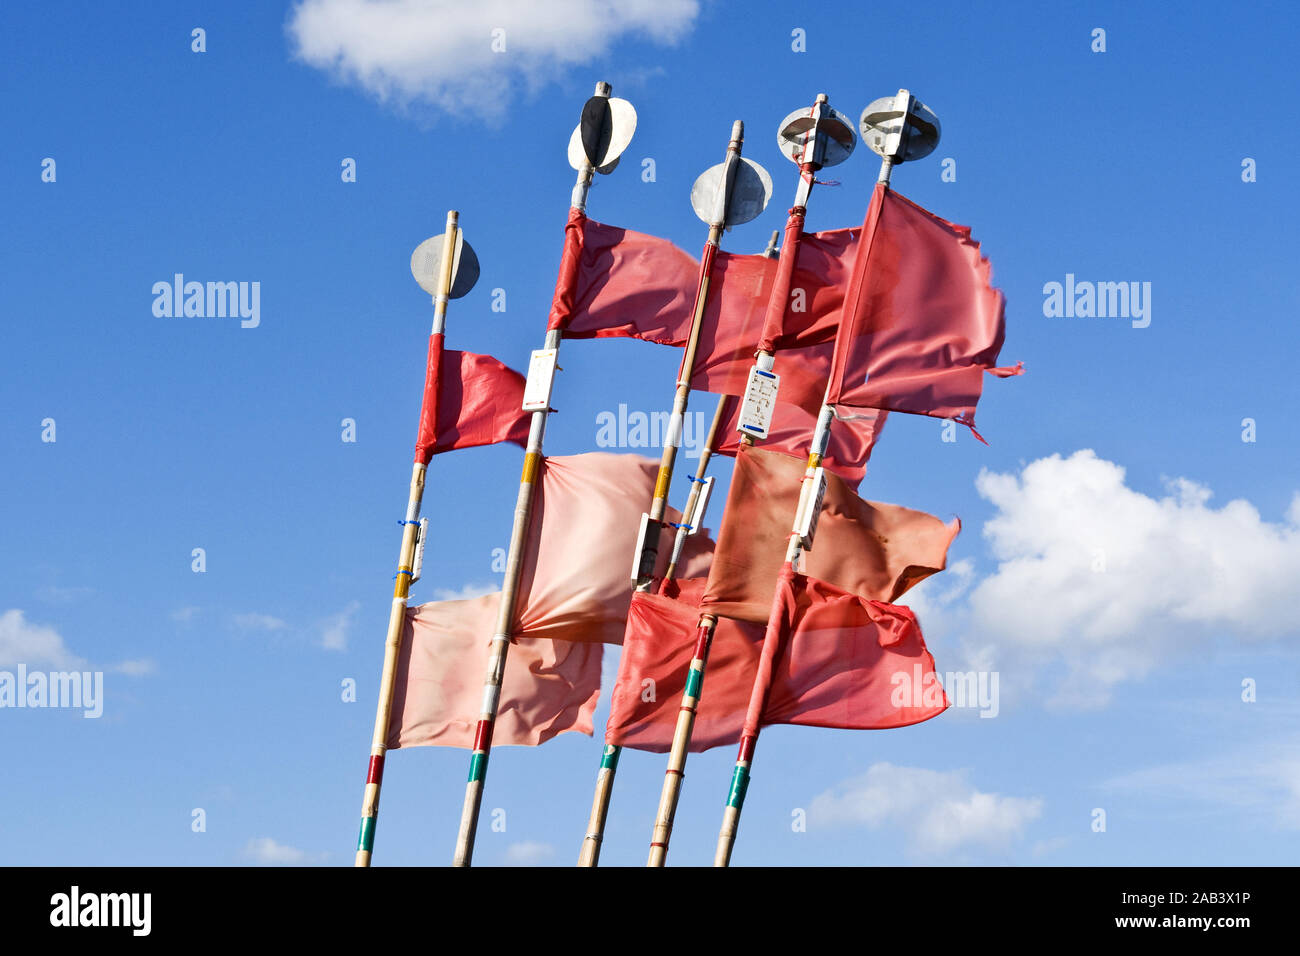 Fahnen von Bojen | Banderas de boyas| Foto de stock